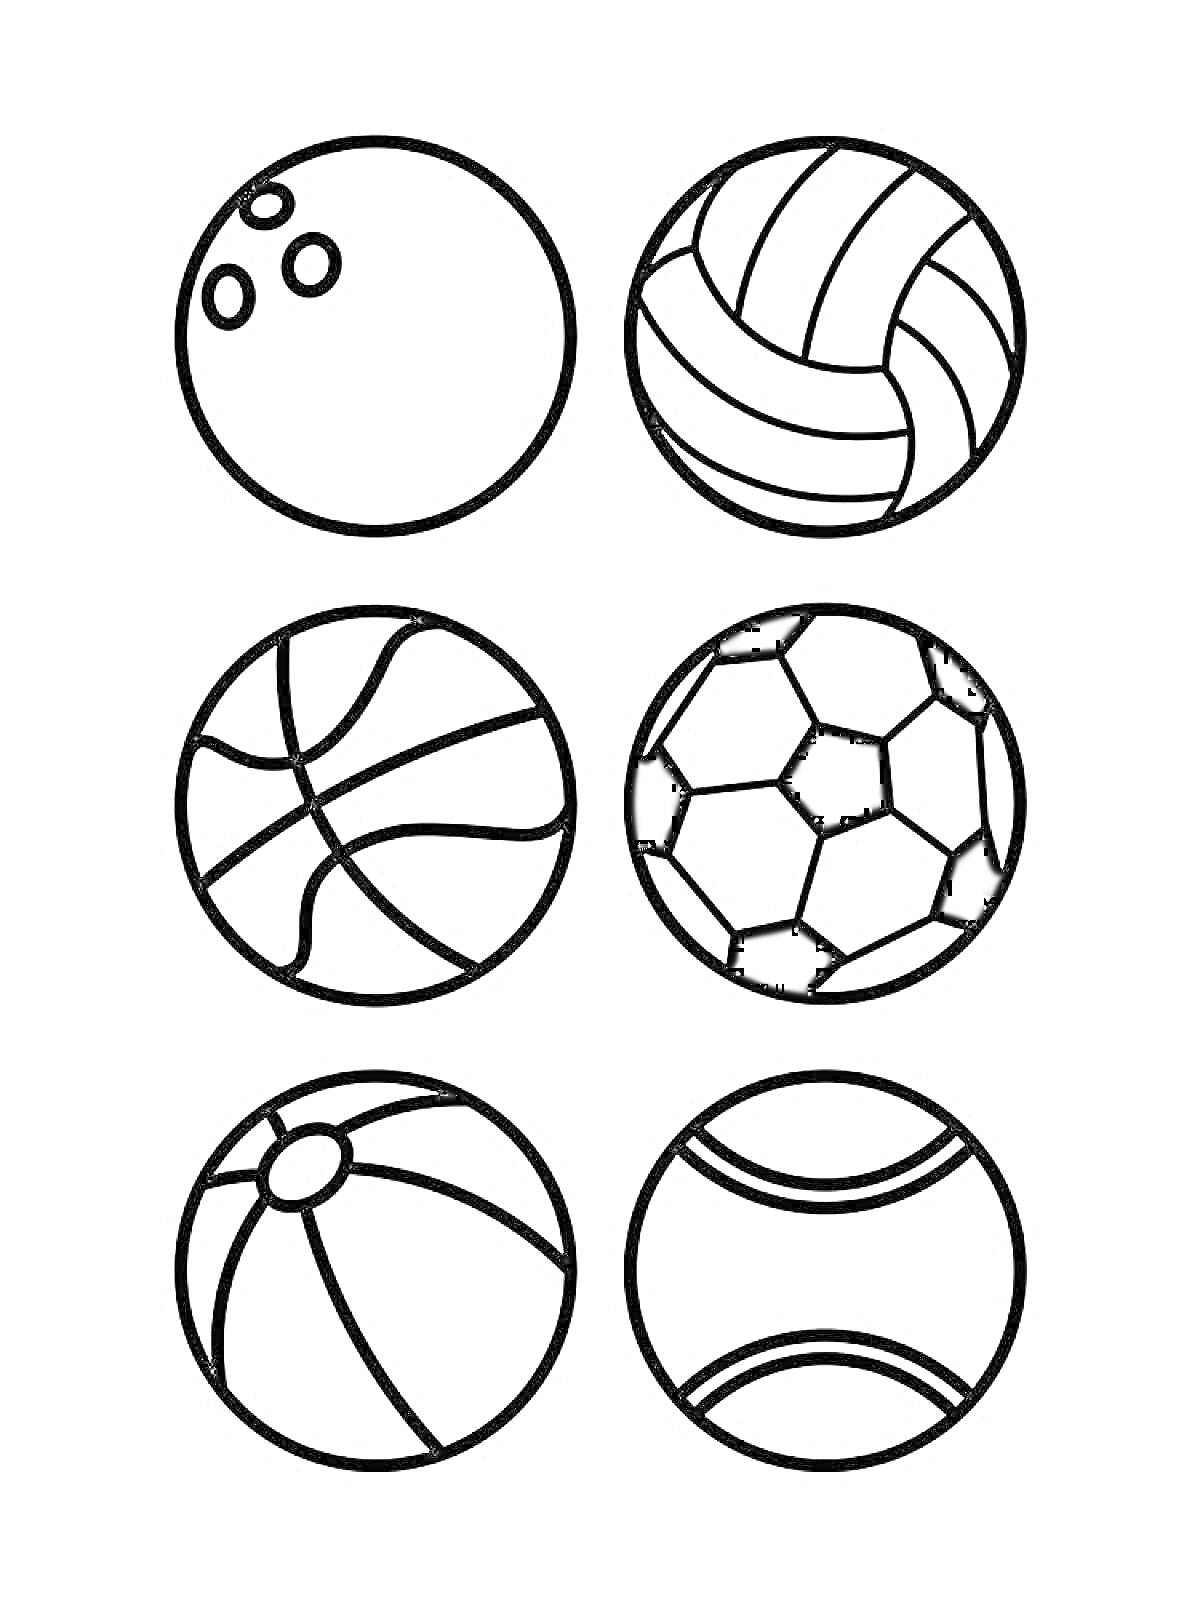 Набор мячей (боулинг, волейбол, баскетбол, футбол, пляжный, теннисный)